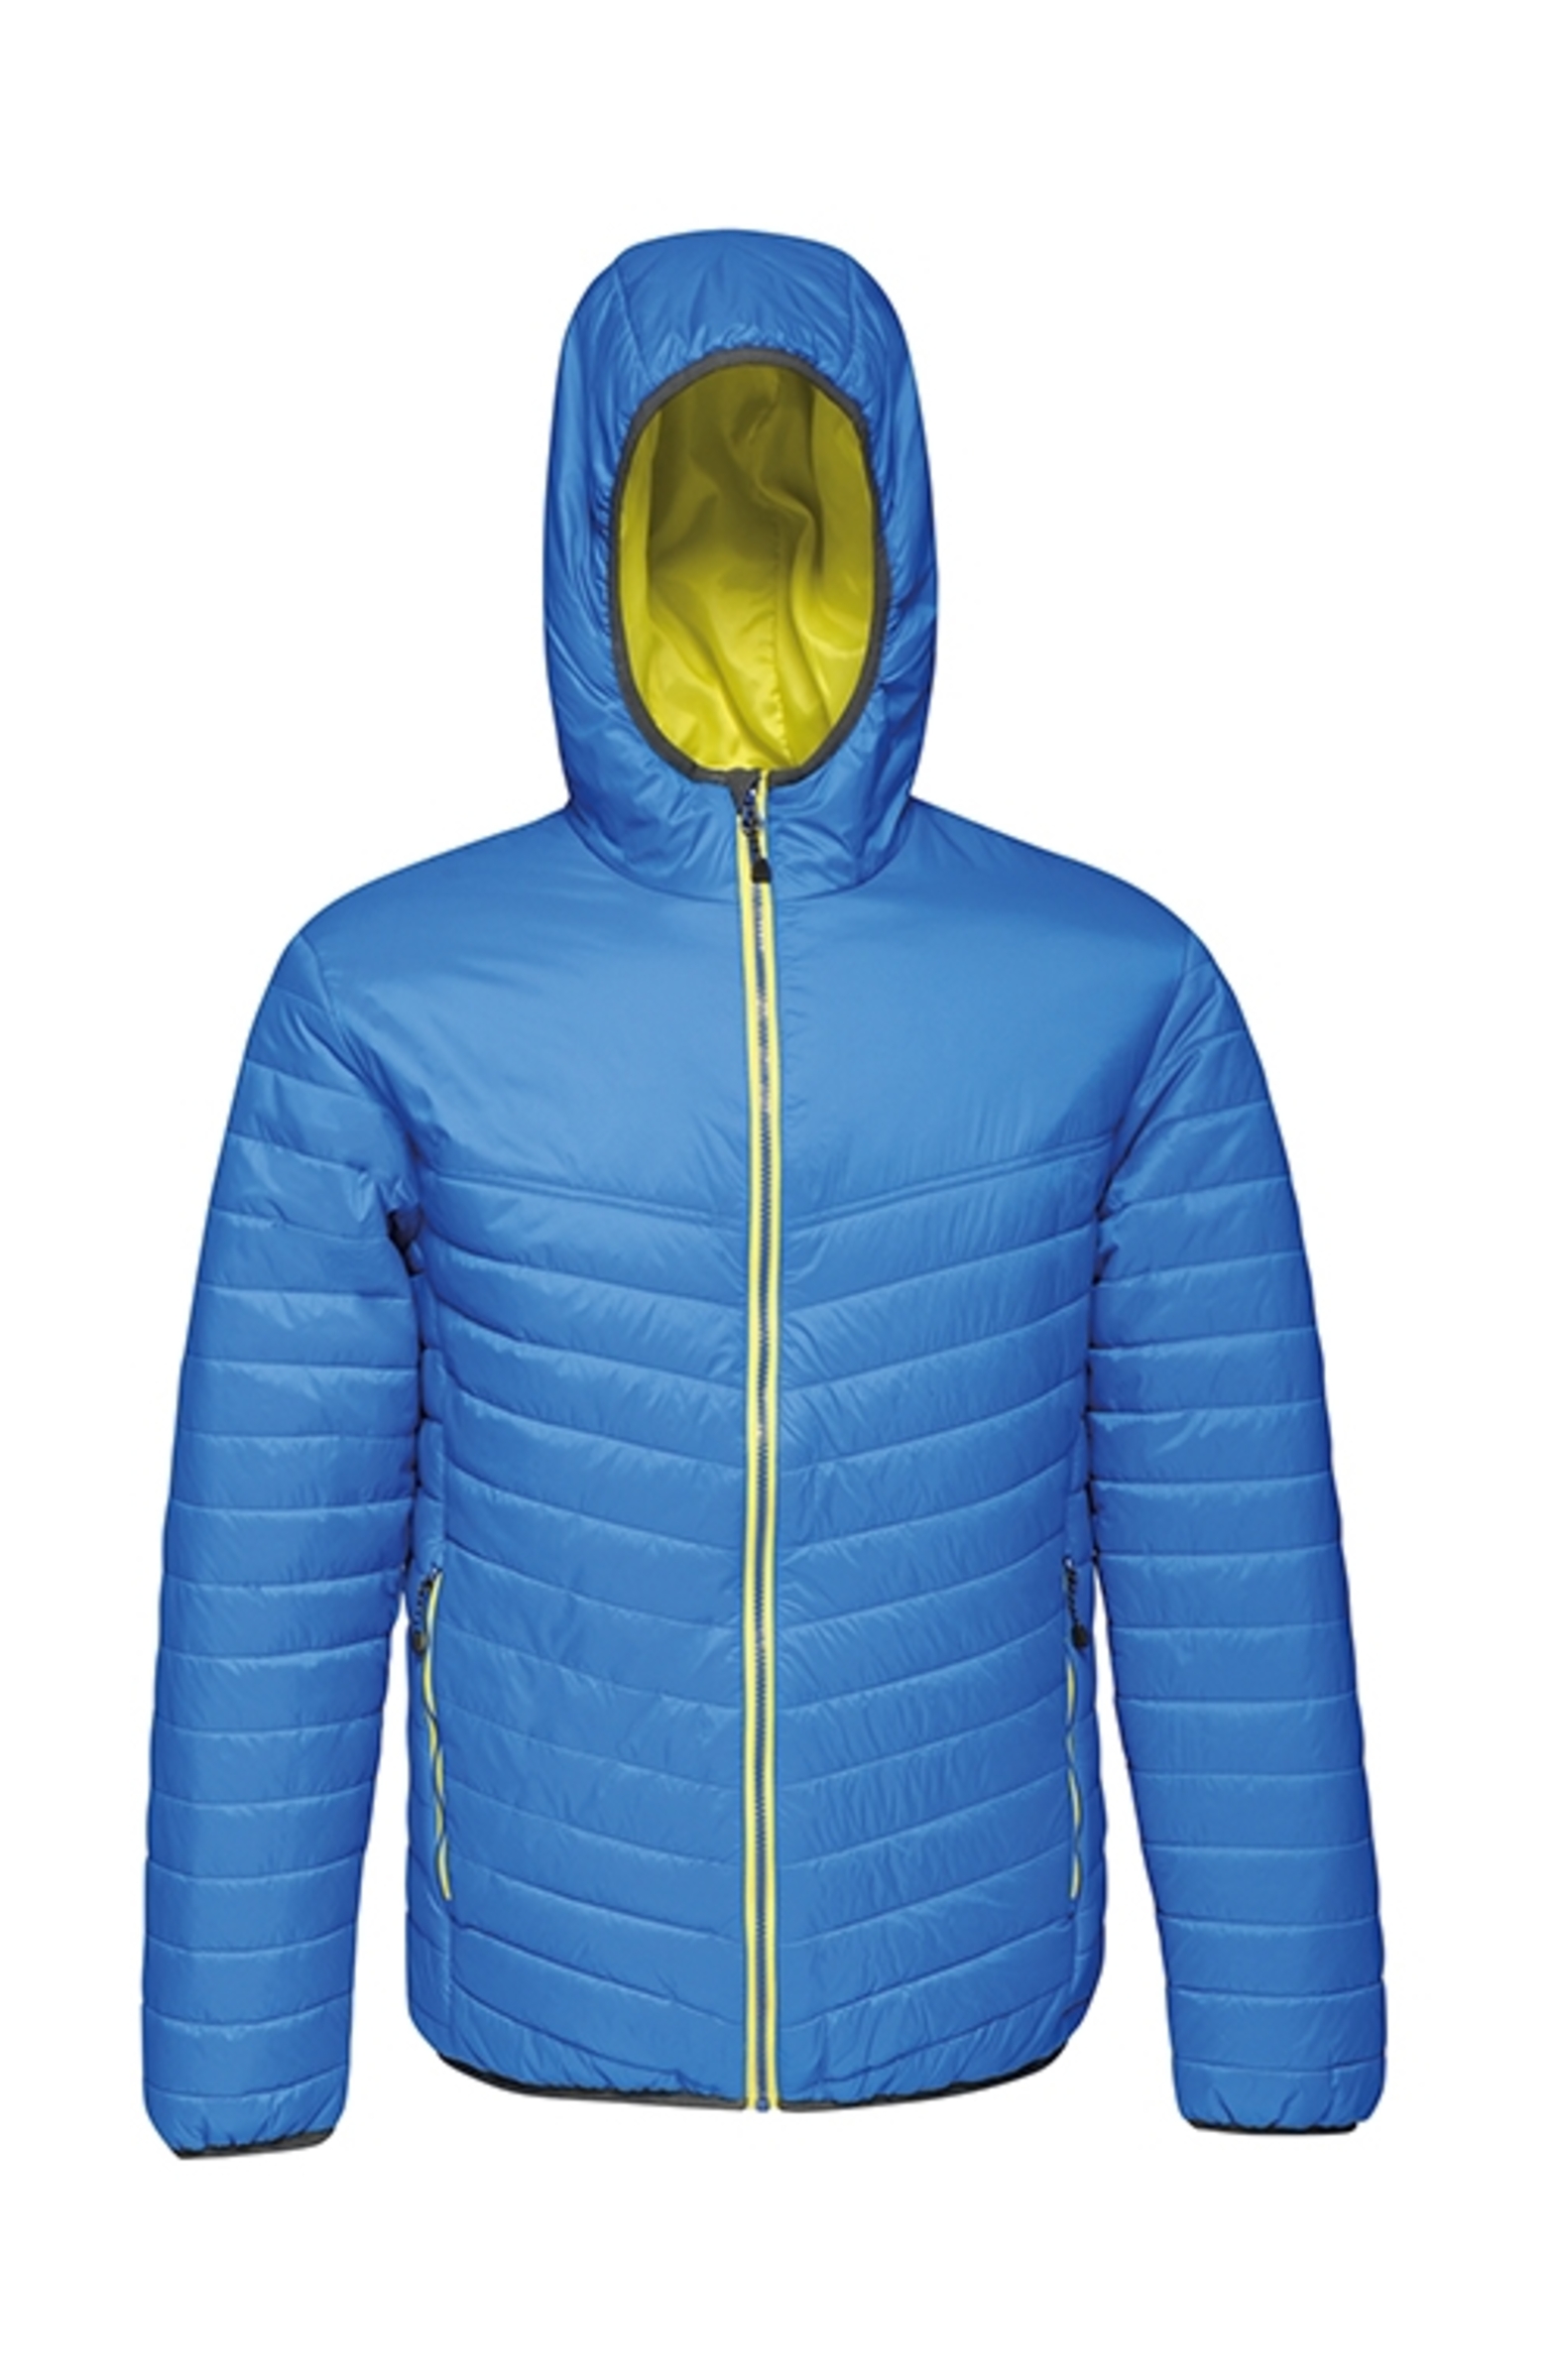 REGATTA Acadia II thermal jacket